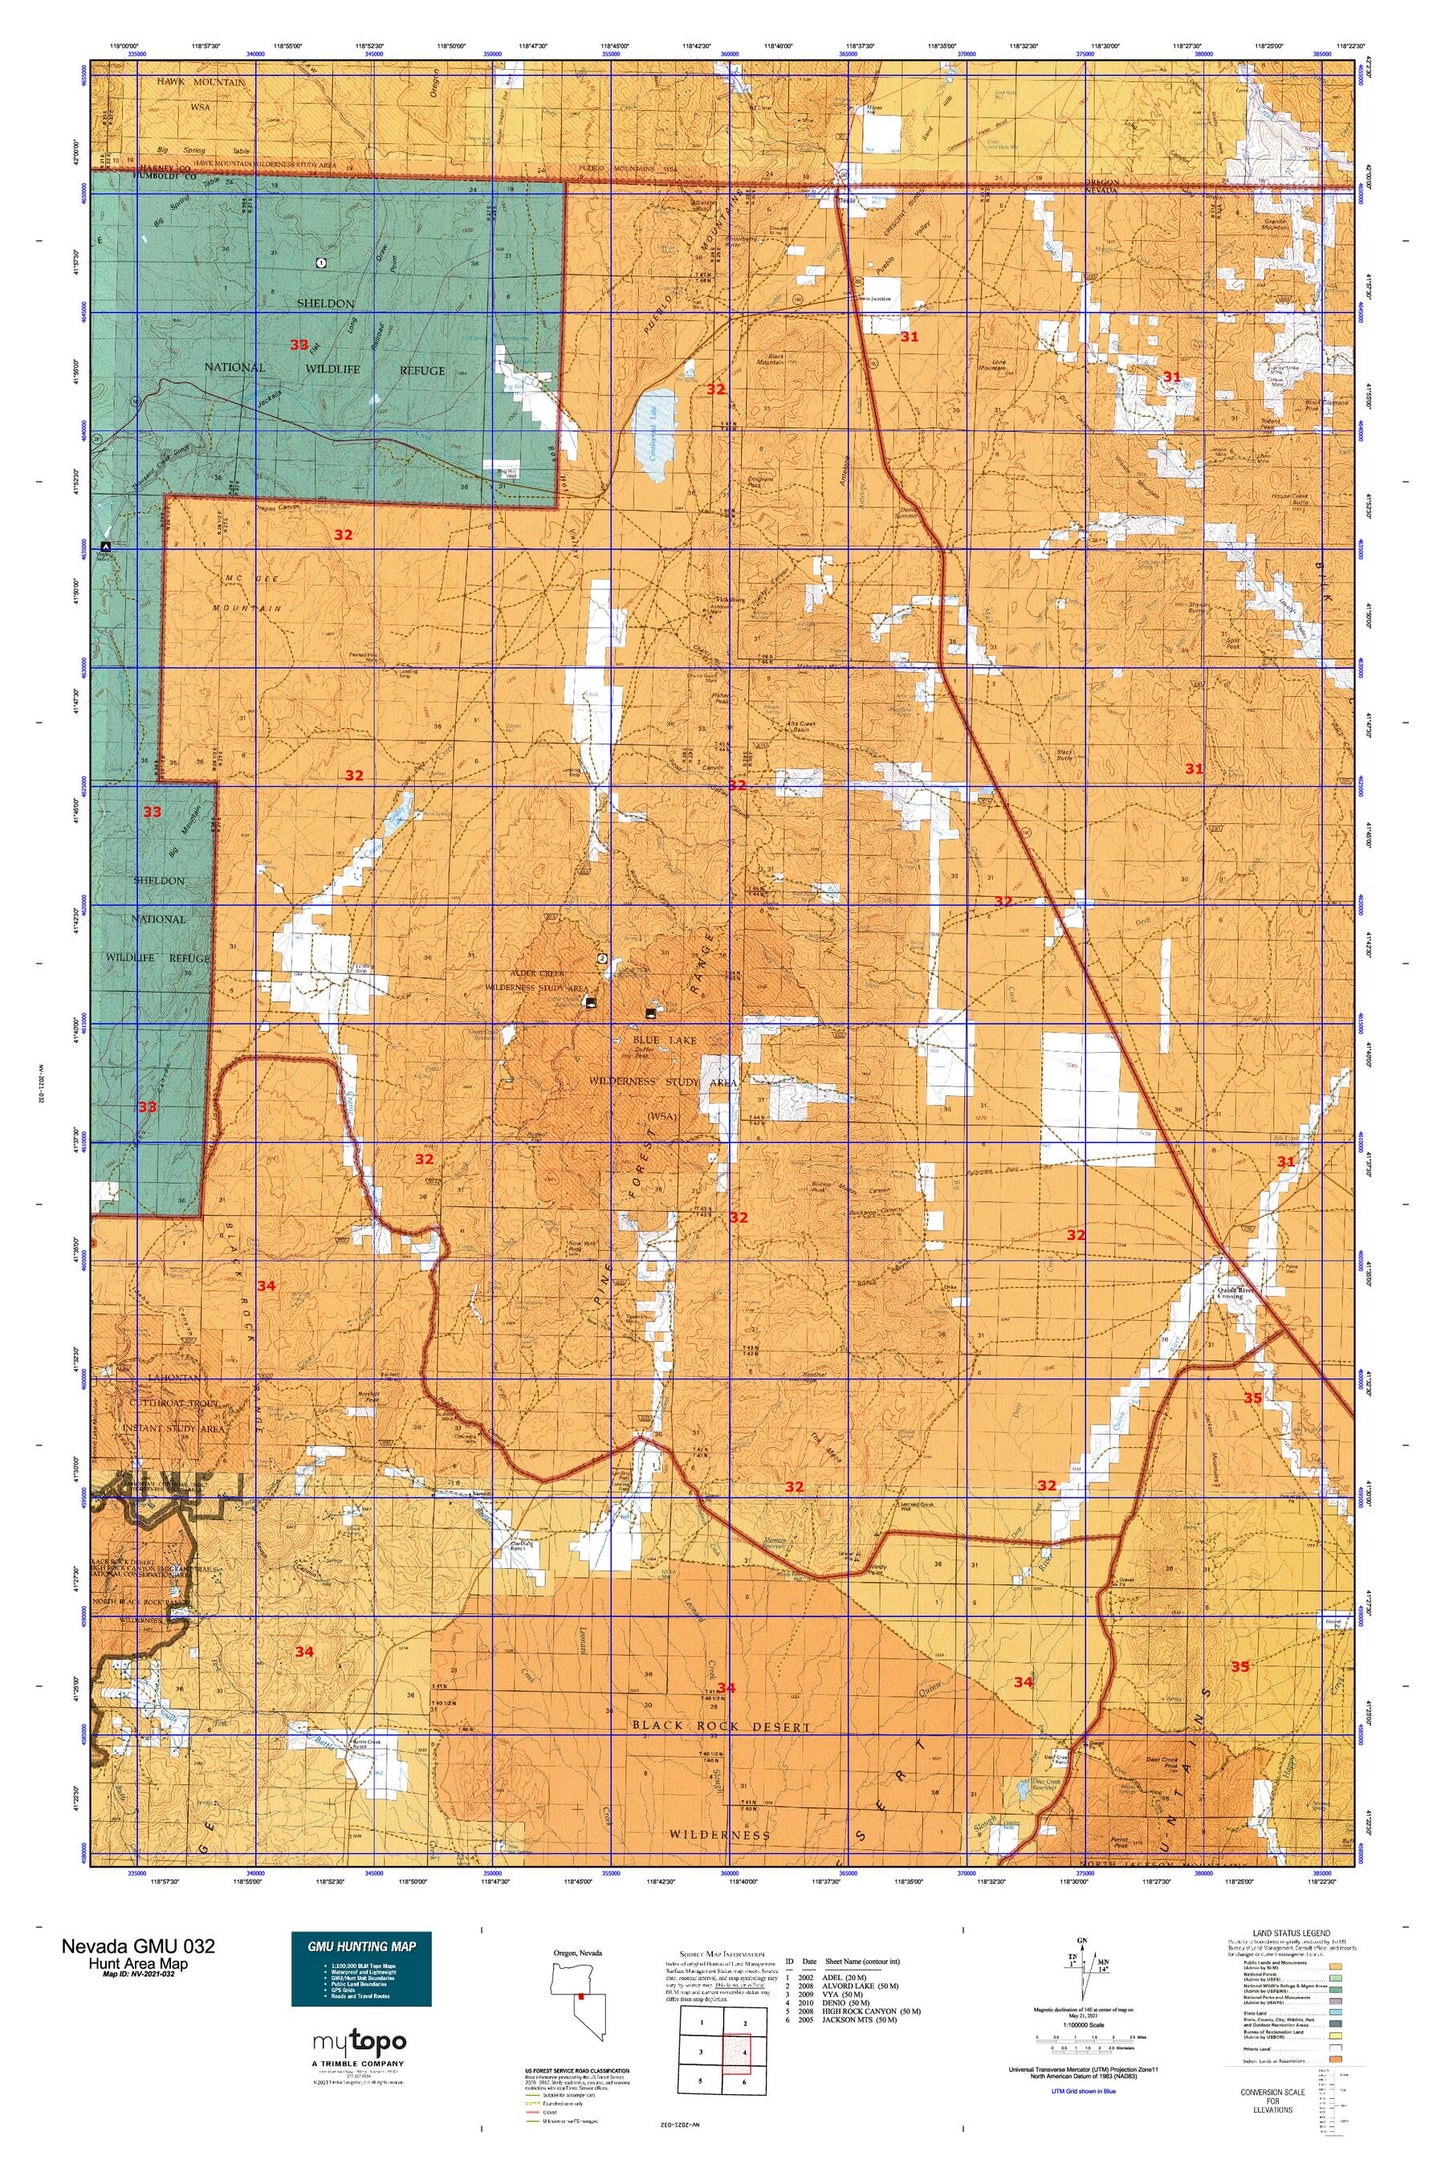 Nevada GMU 032 Map Image